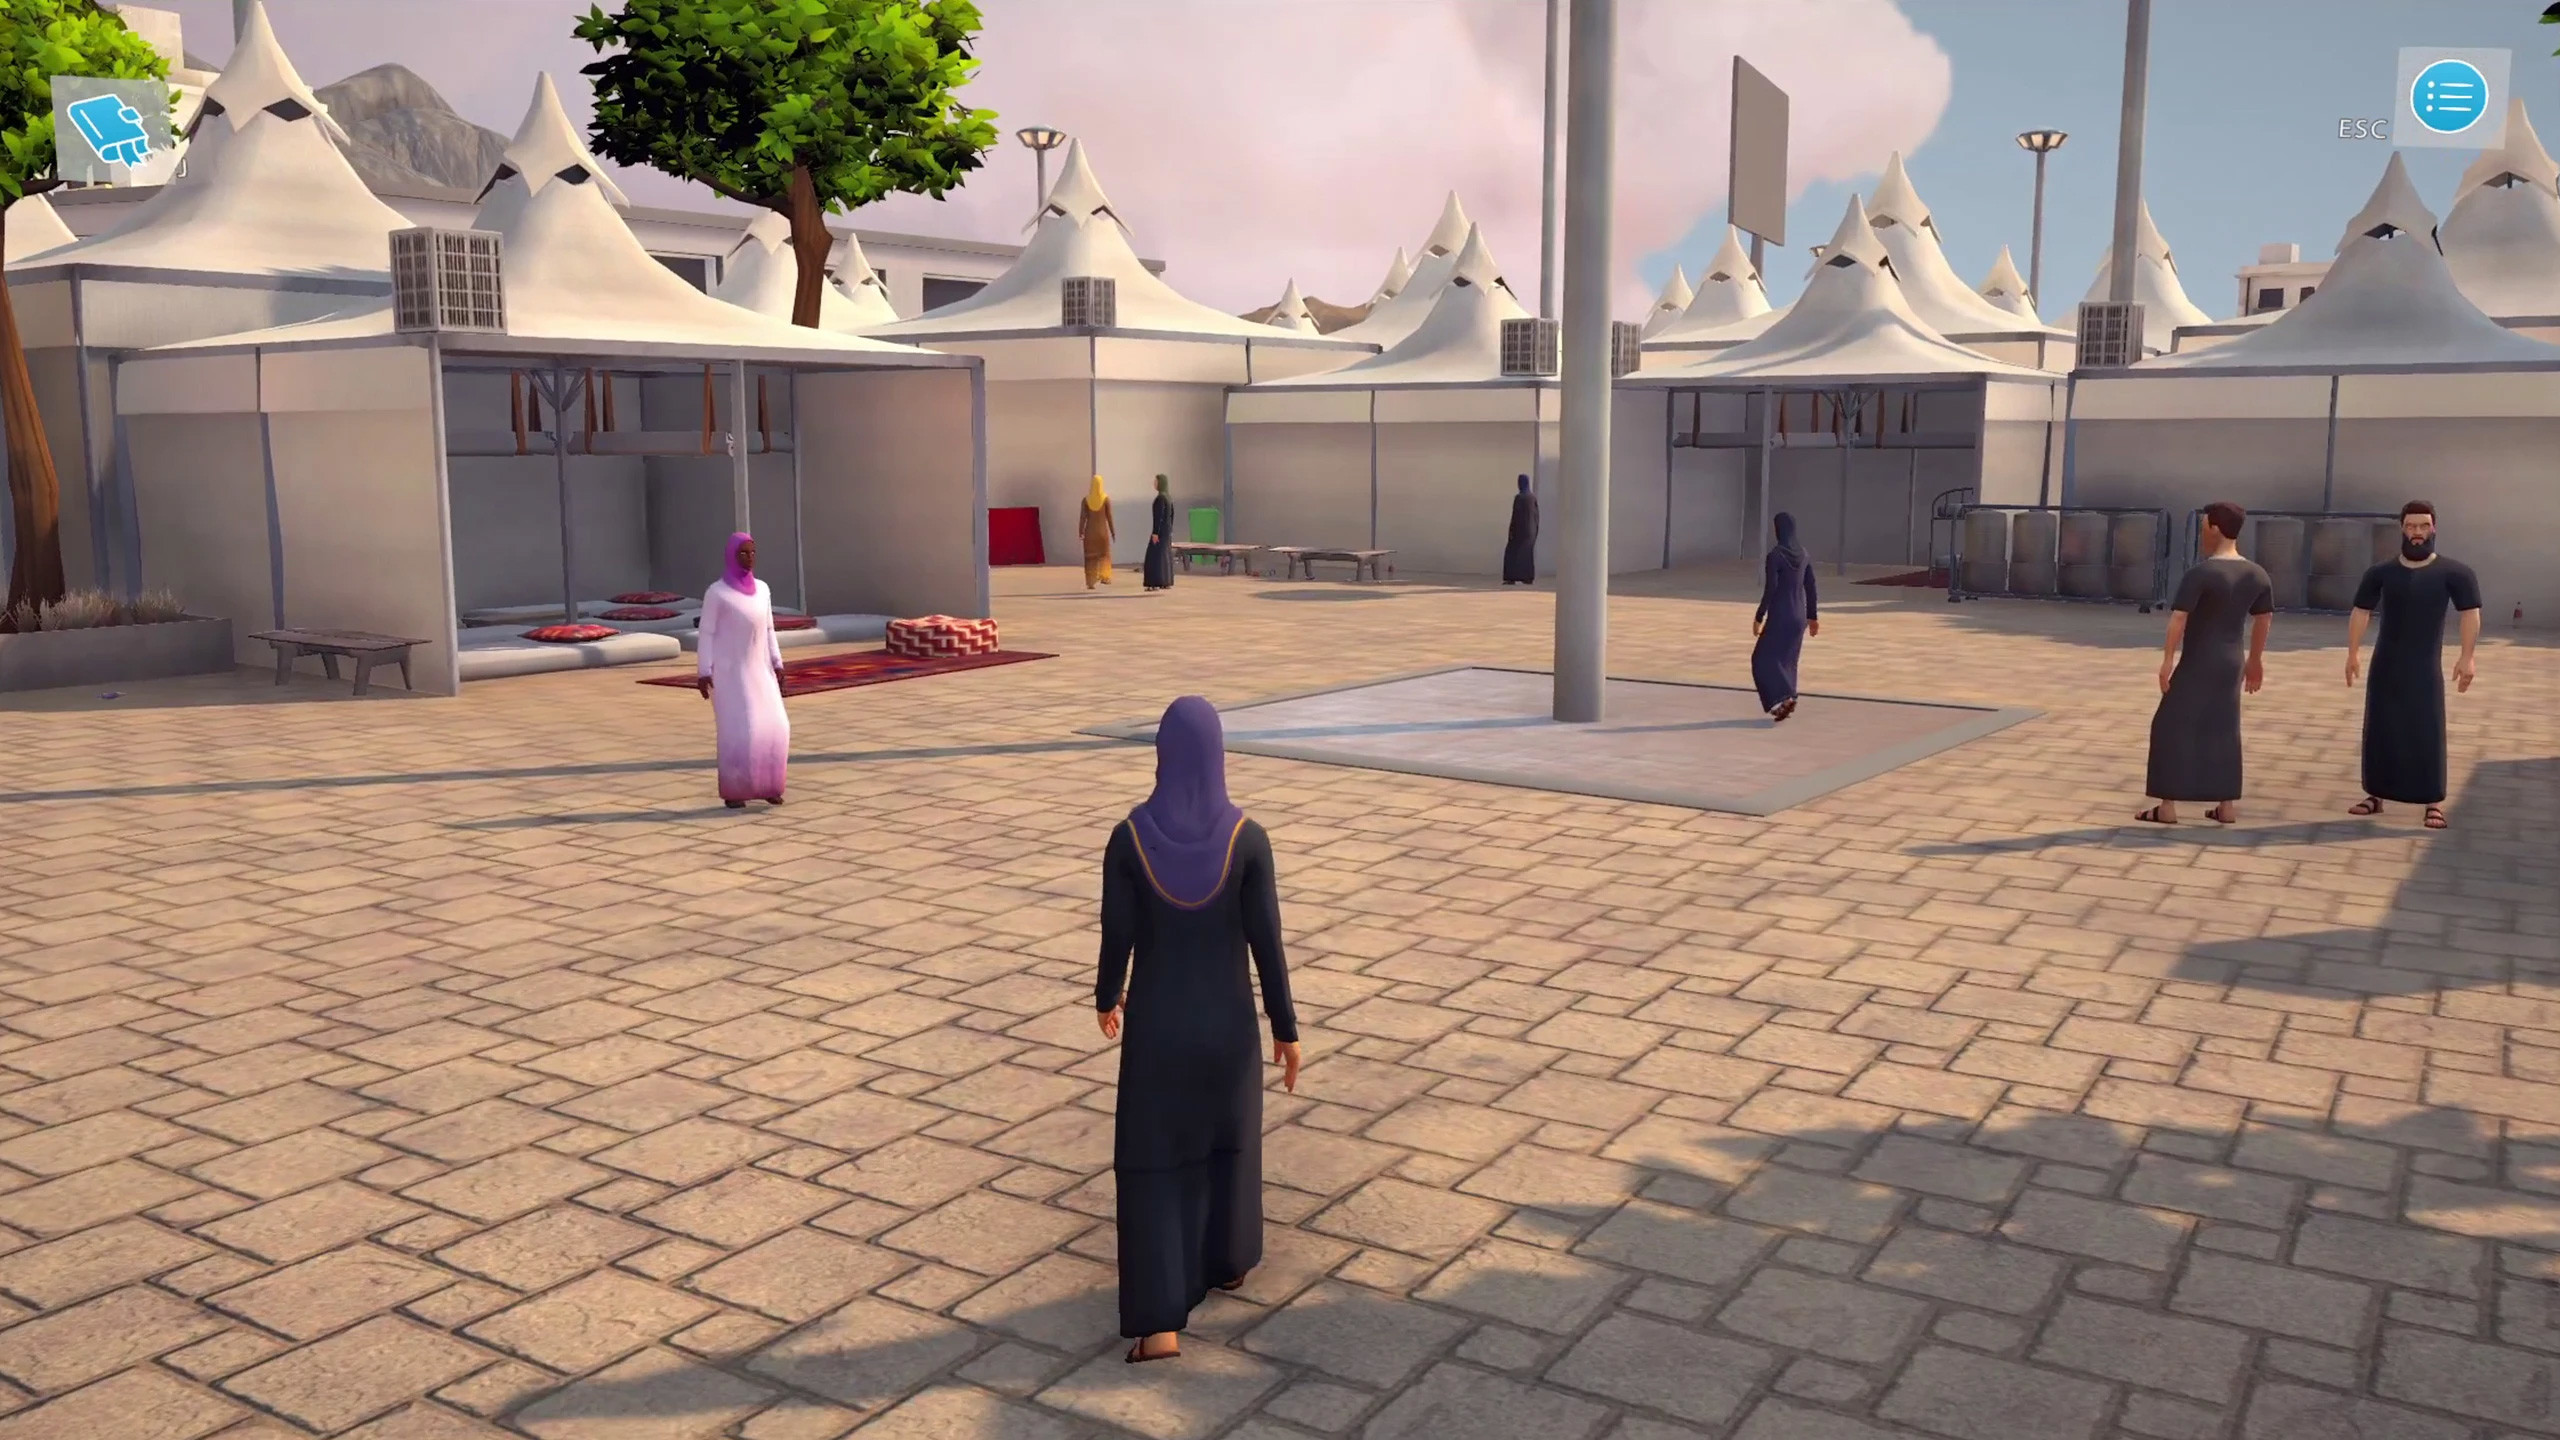 Muslim 3D screenshot